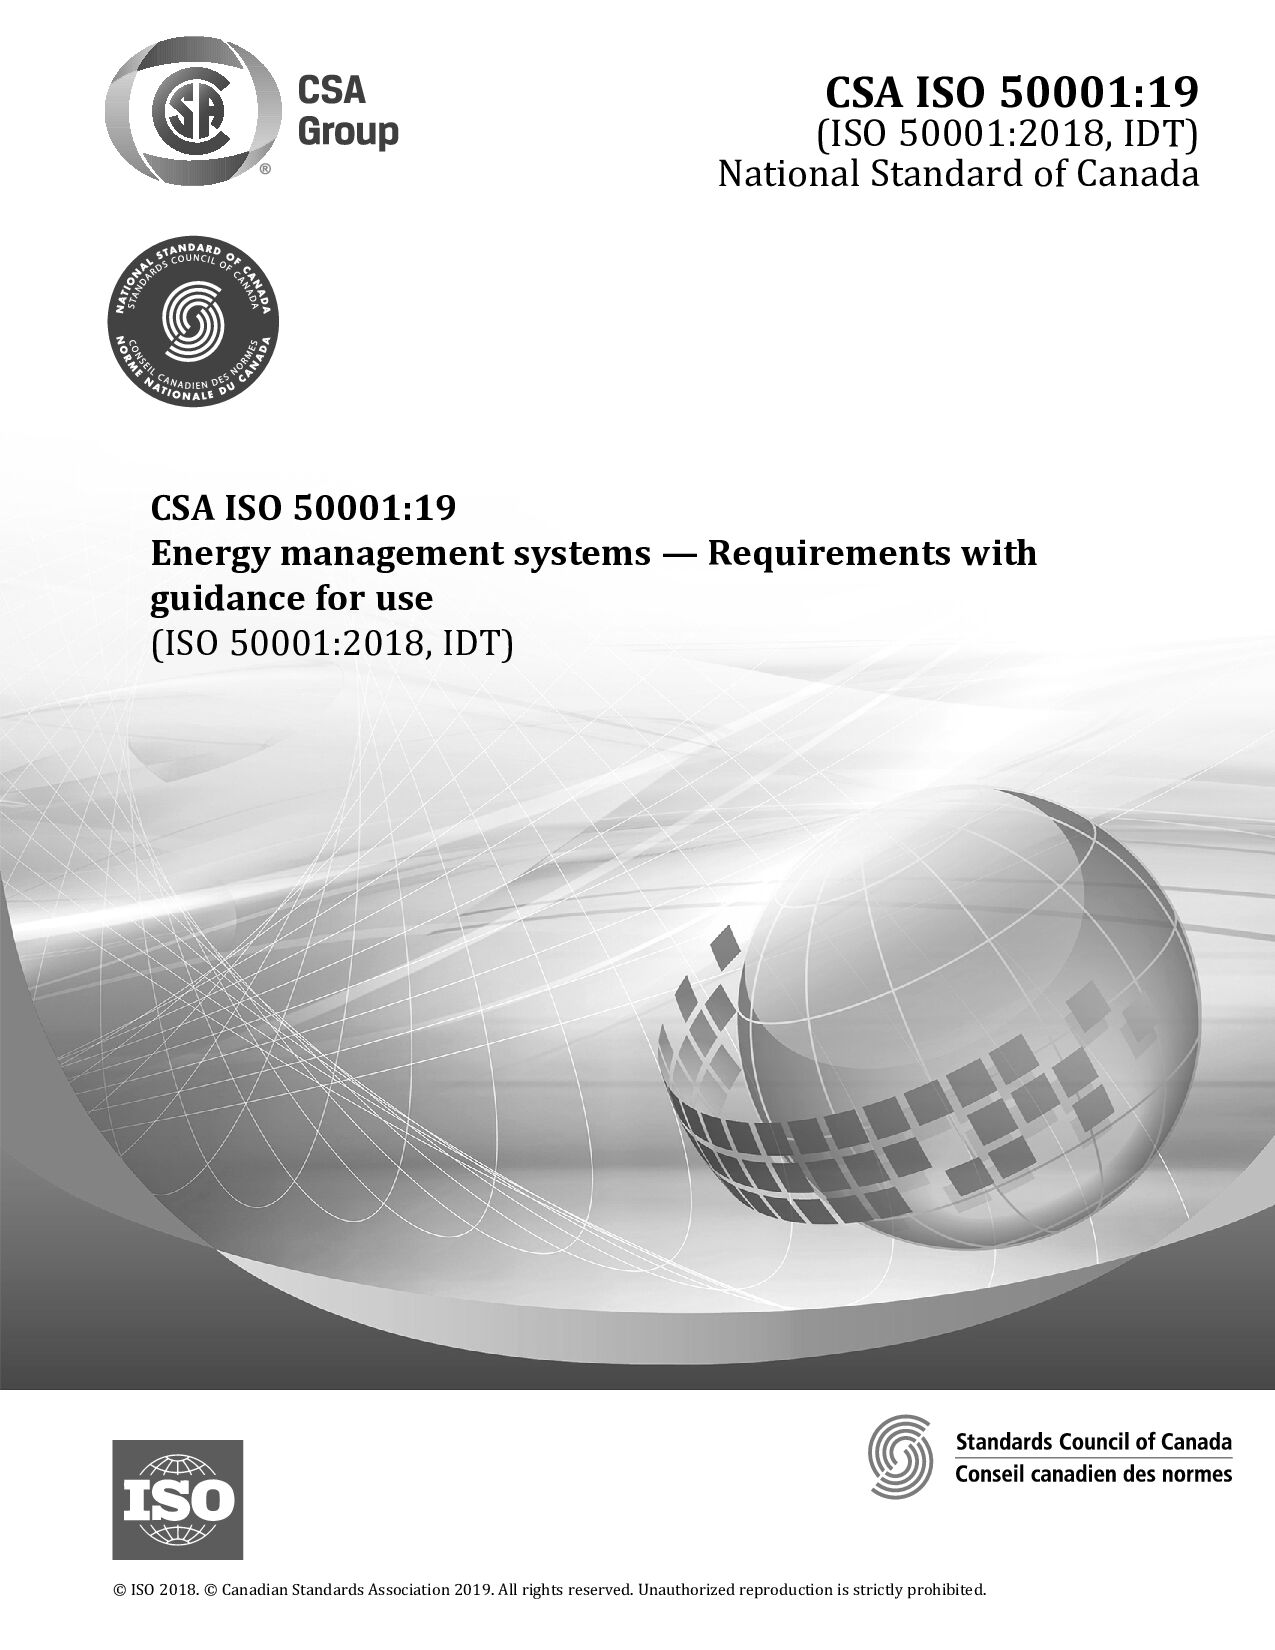 CSA ISO 50001:2019